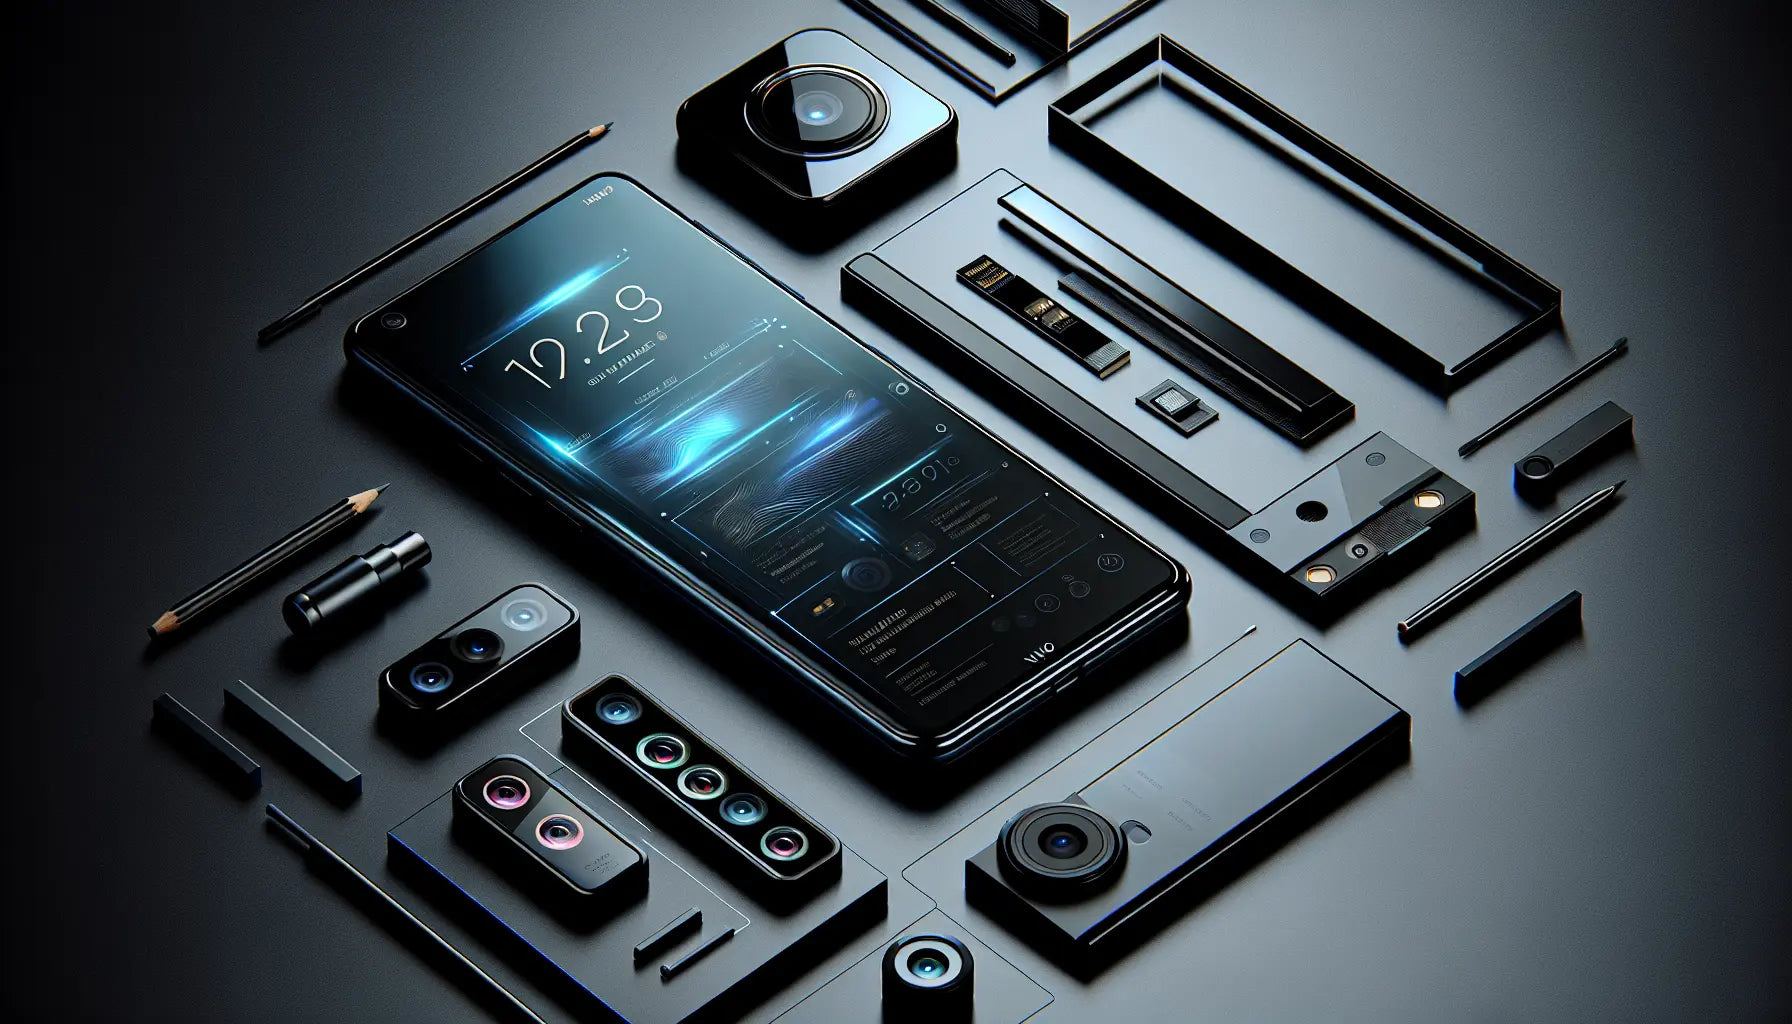 Huawei nova 2s: The Game-Changing Mid-Range Smartphone